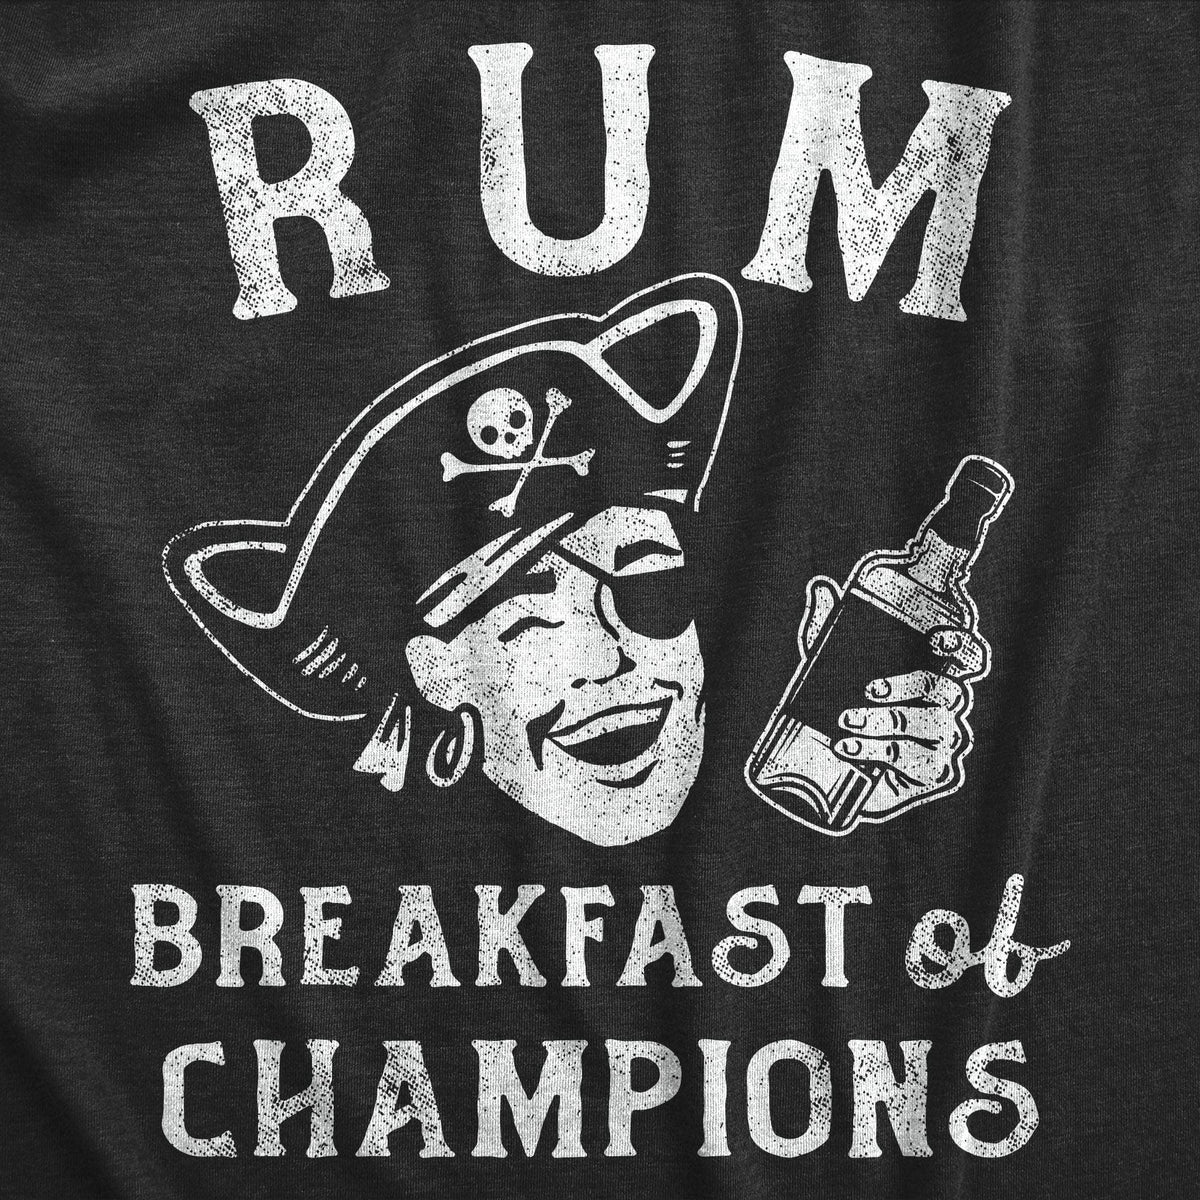 Rum Breakfast Of Champions Men&#39;s Tshirt  -  Crazy Dog T-Shirts